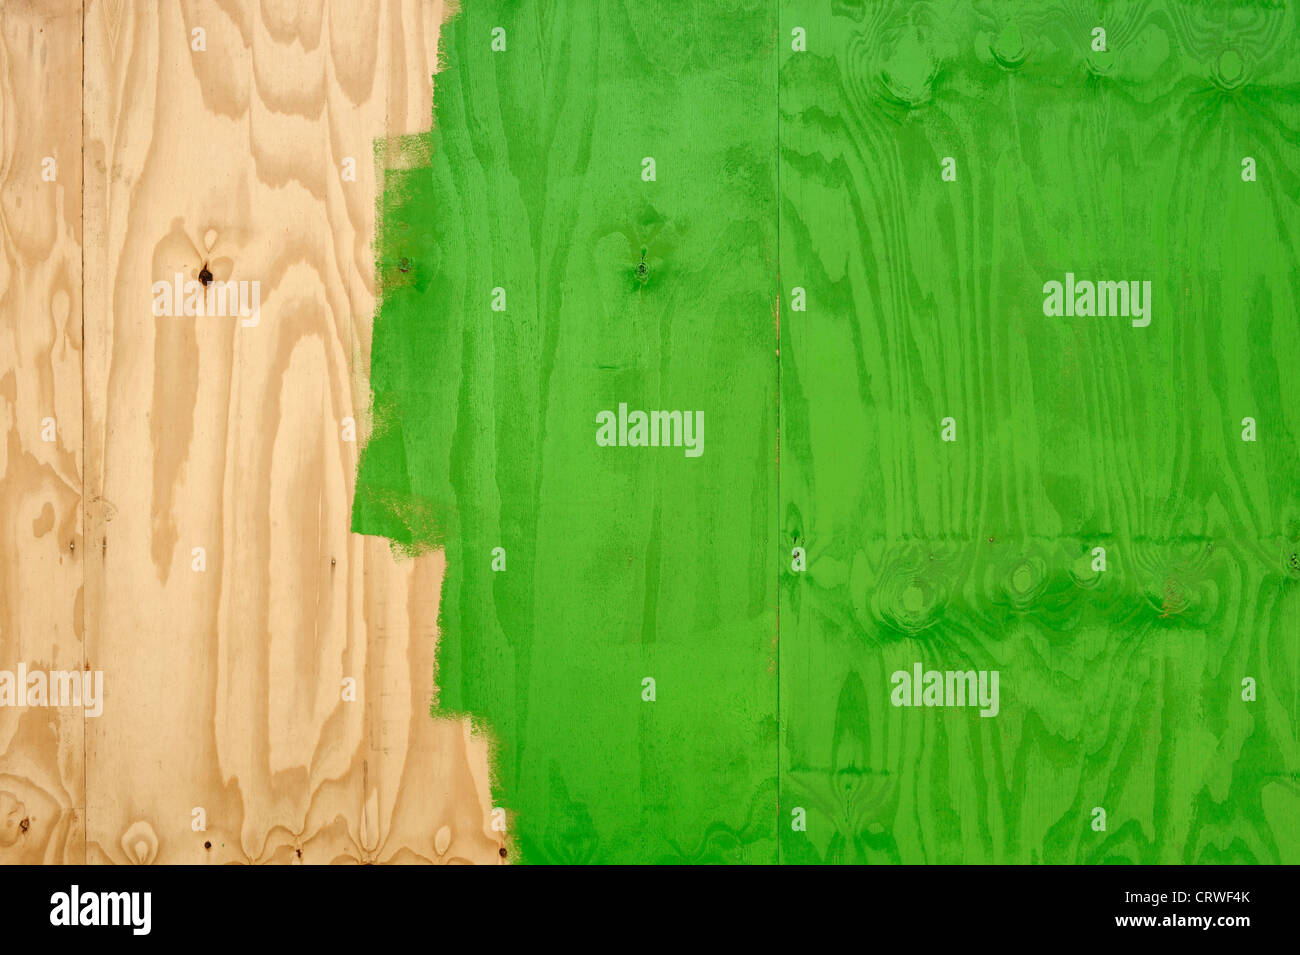 Holzwand wird grün lackiert Stockfoto